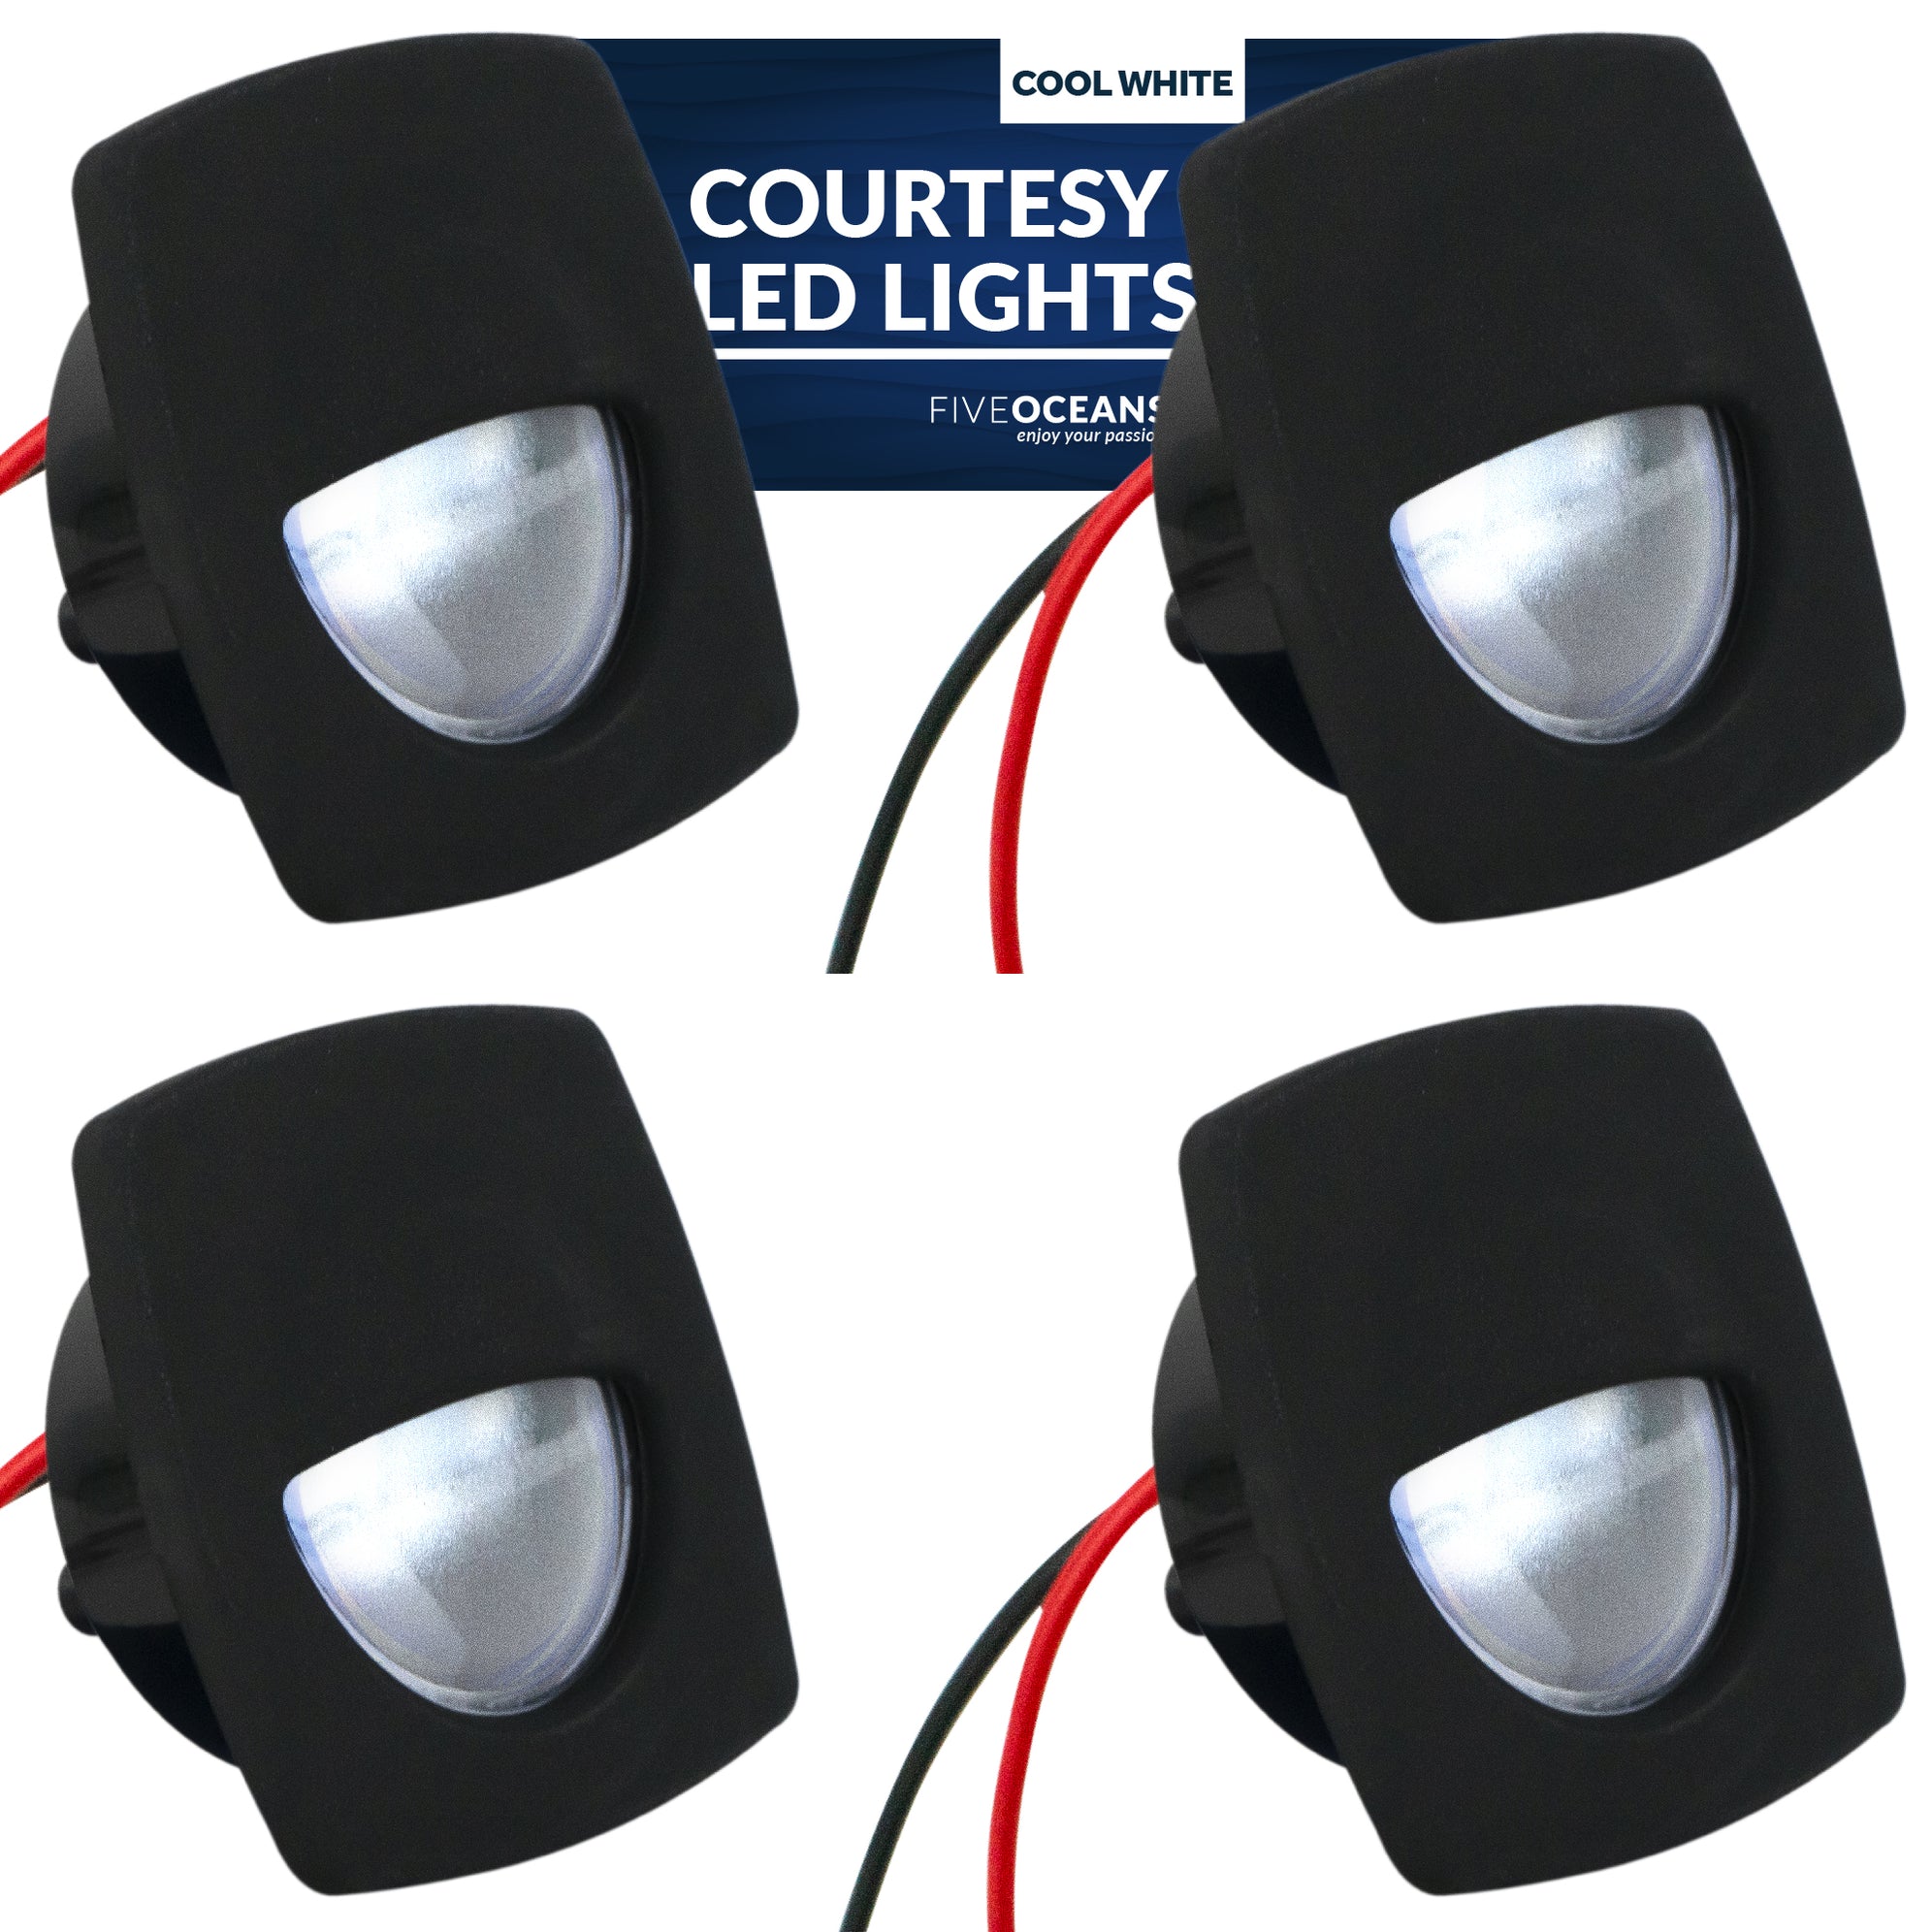 LED Courtesy Companion Way Light, Black Square, Cool White, 4-Pack - FO2313-M4